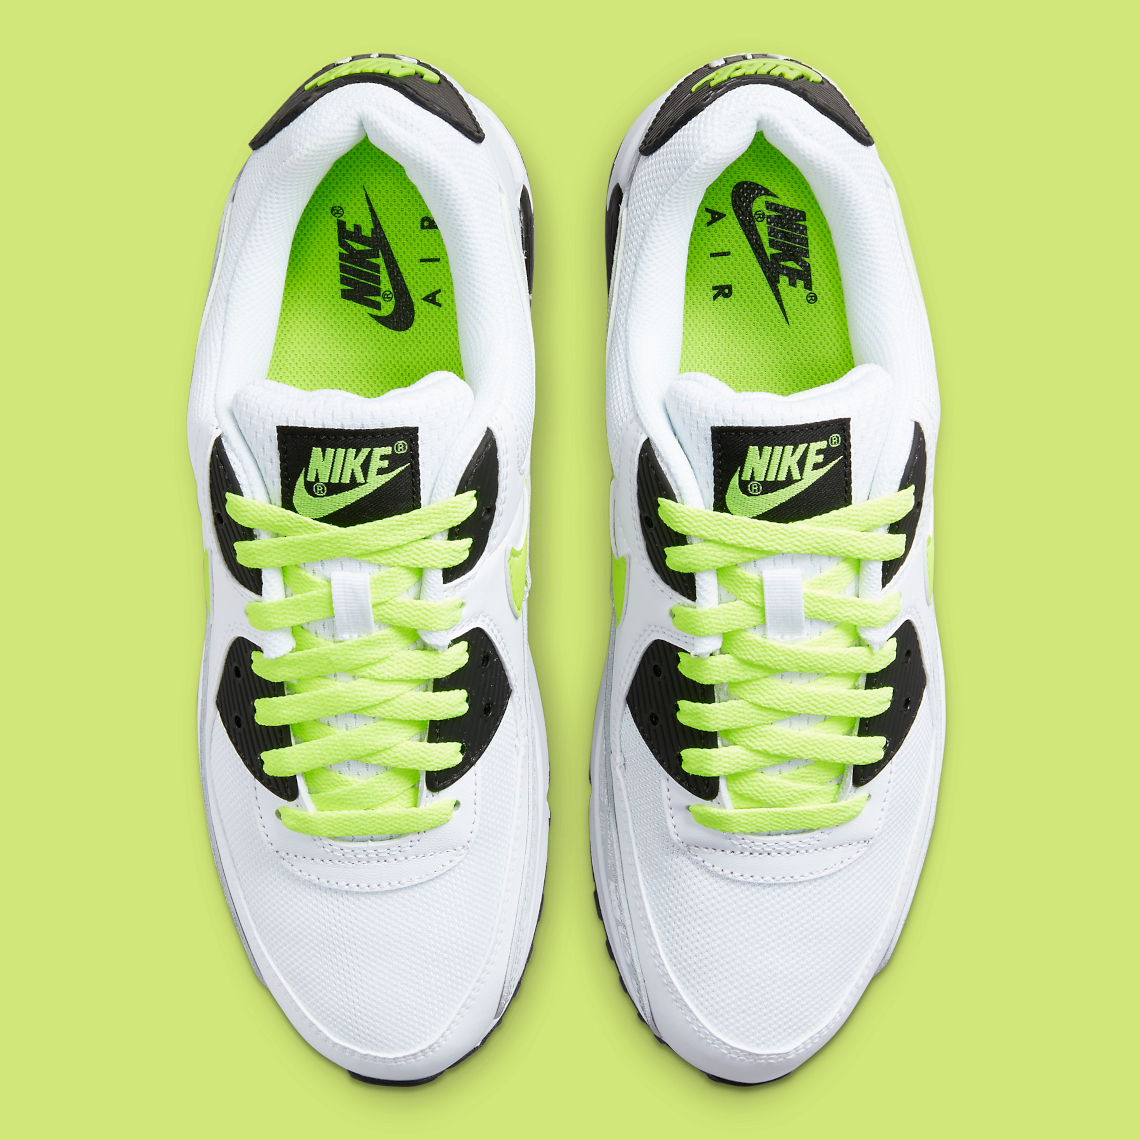 Nike Air Max 90 white-volt-black-pure platinum - DB0625-100